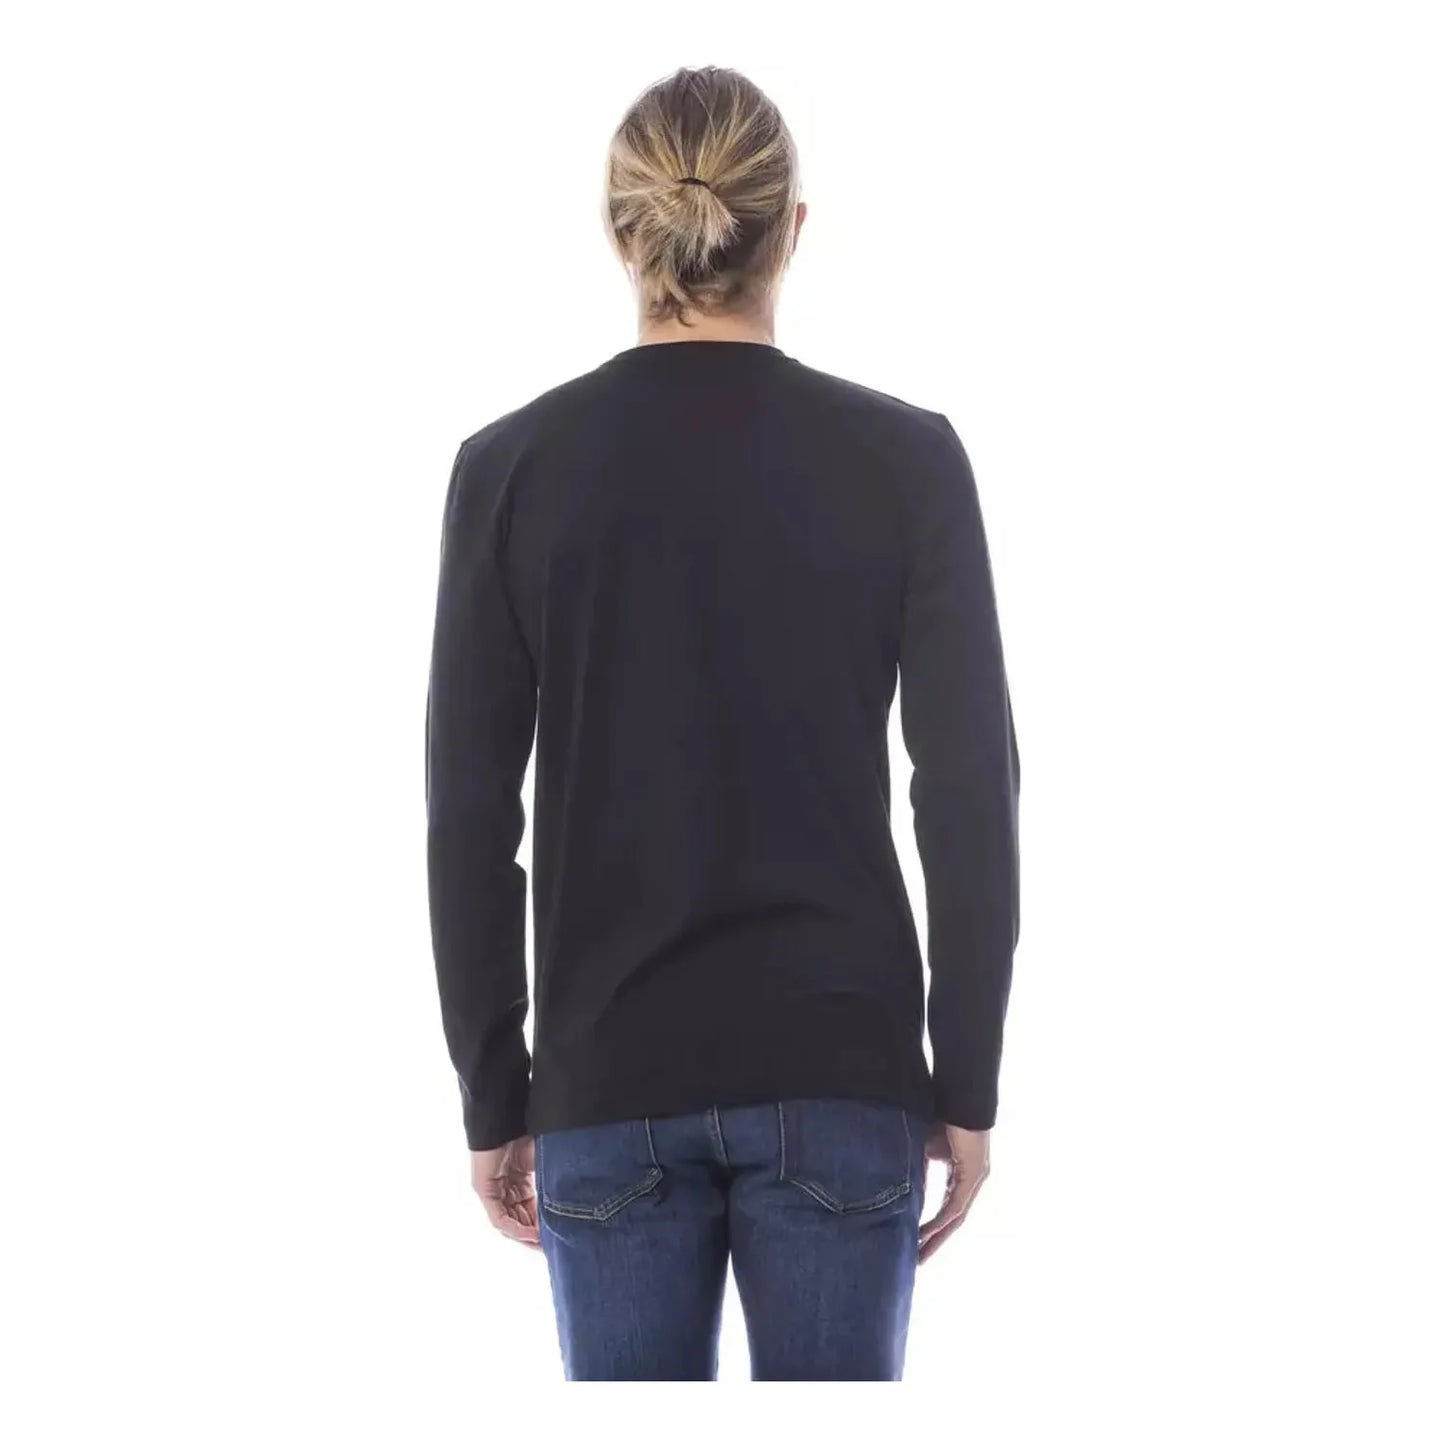 Verri Elegant Black Cotton Long Sleeve T-Shirt vnero-t-shirt